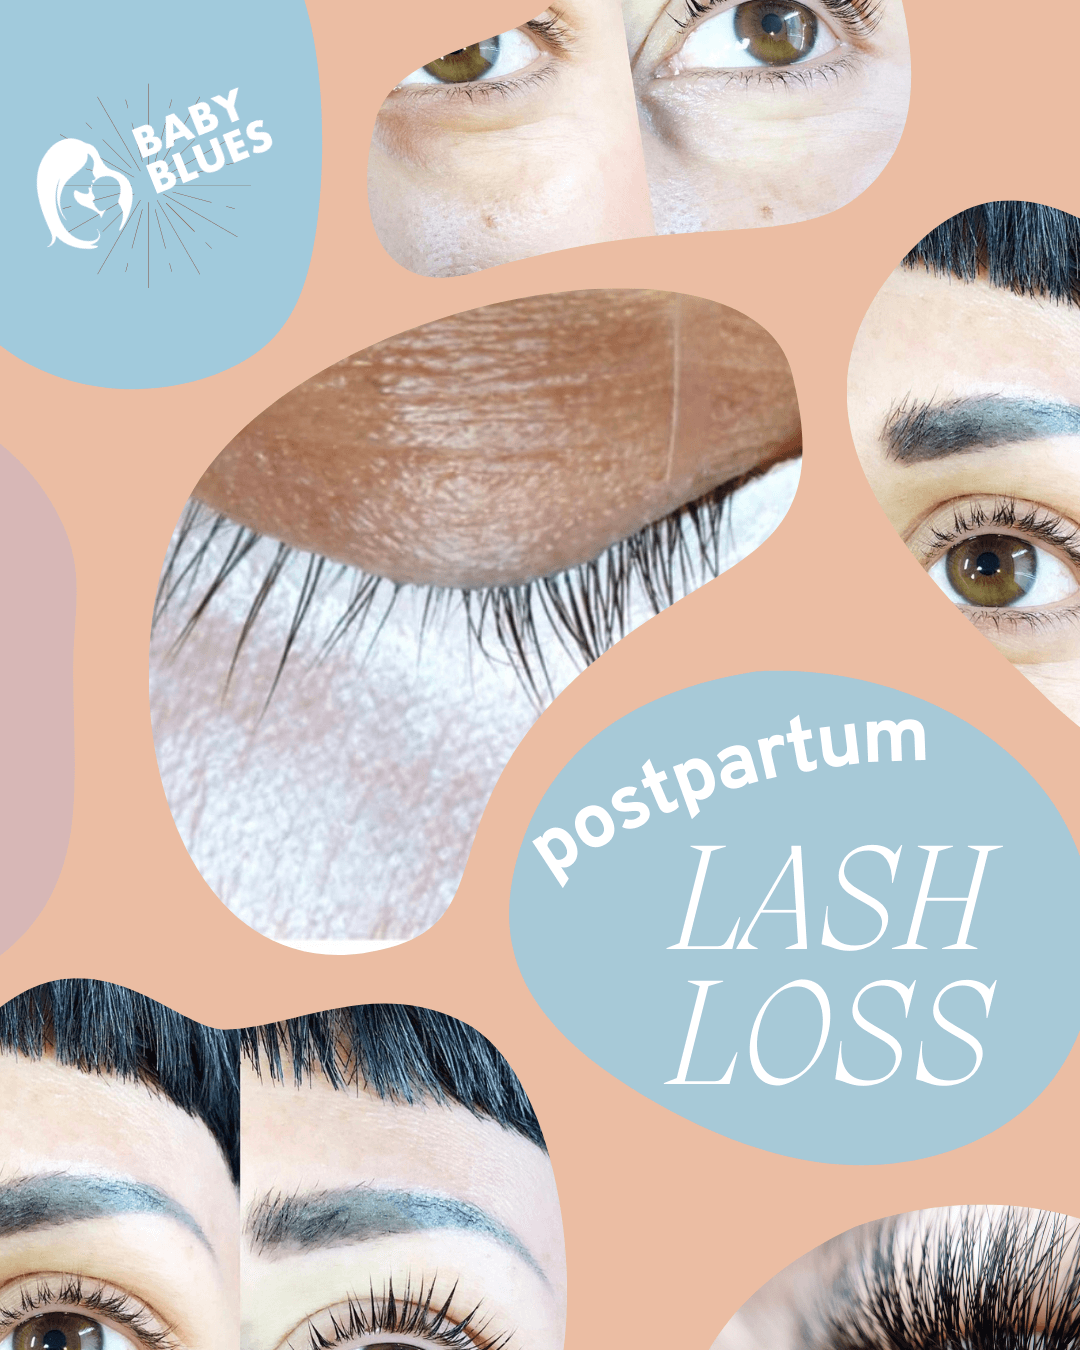 Postpartum lash loss